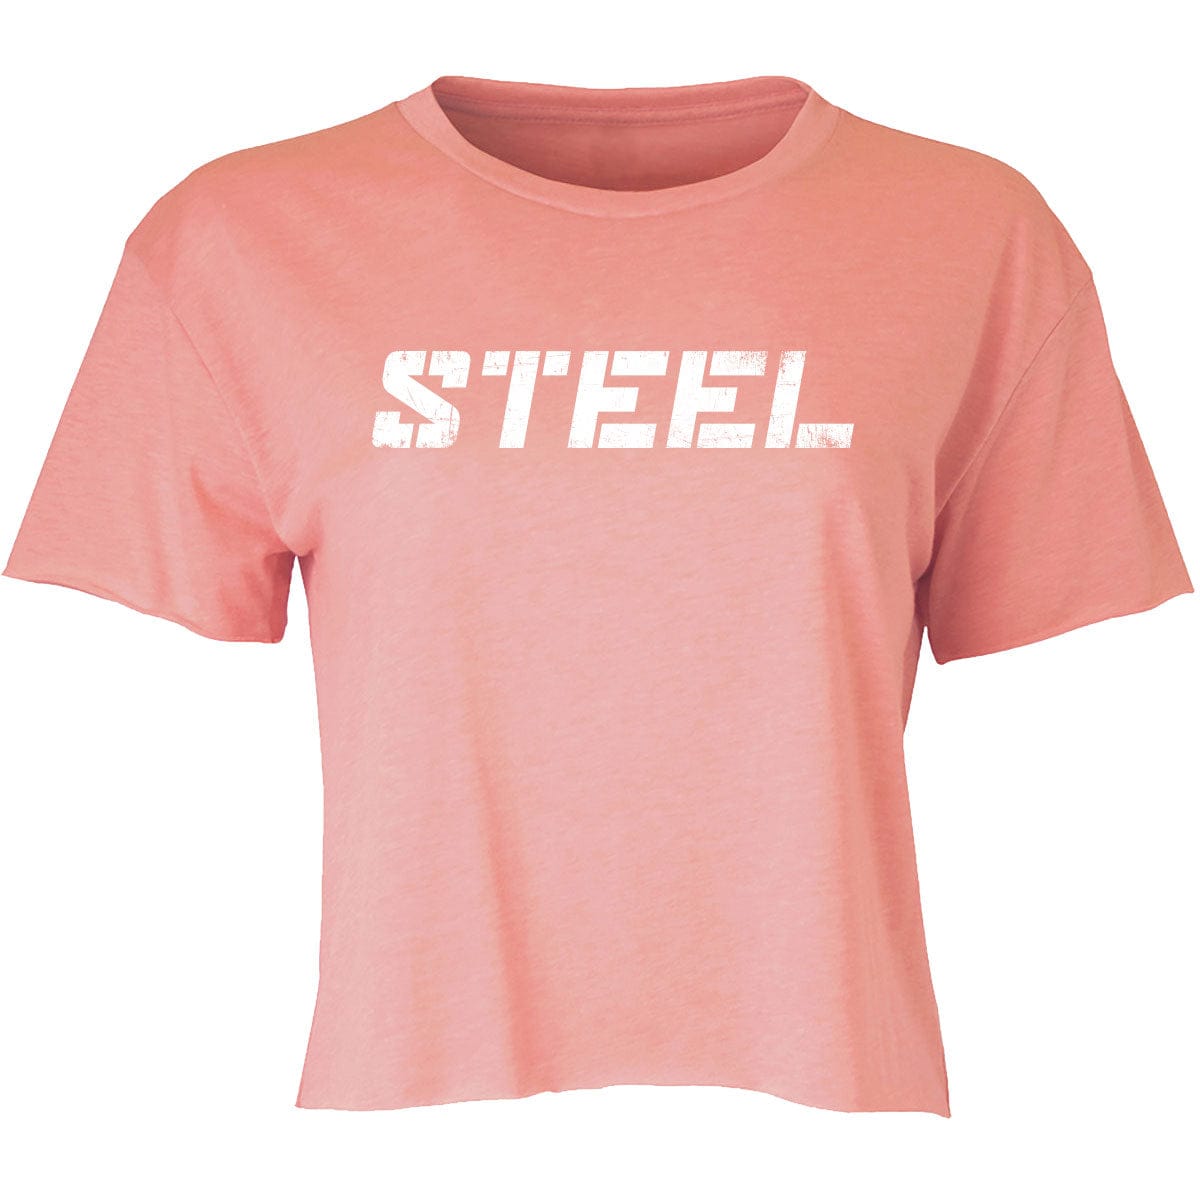 Steel Supplements White on Desert Pink / XS Women's Everyday Crop